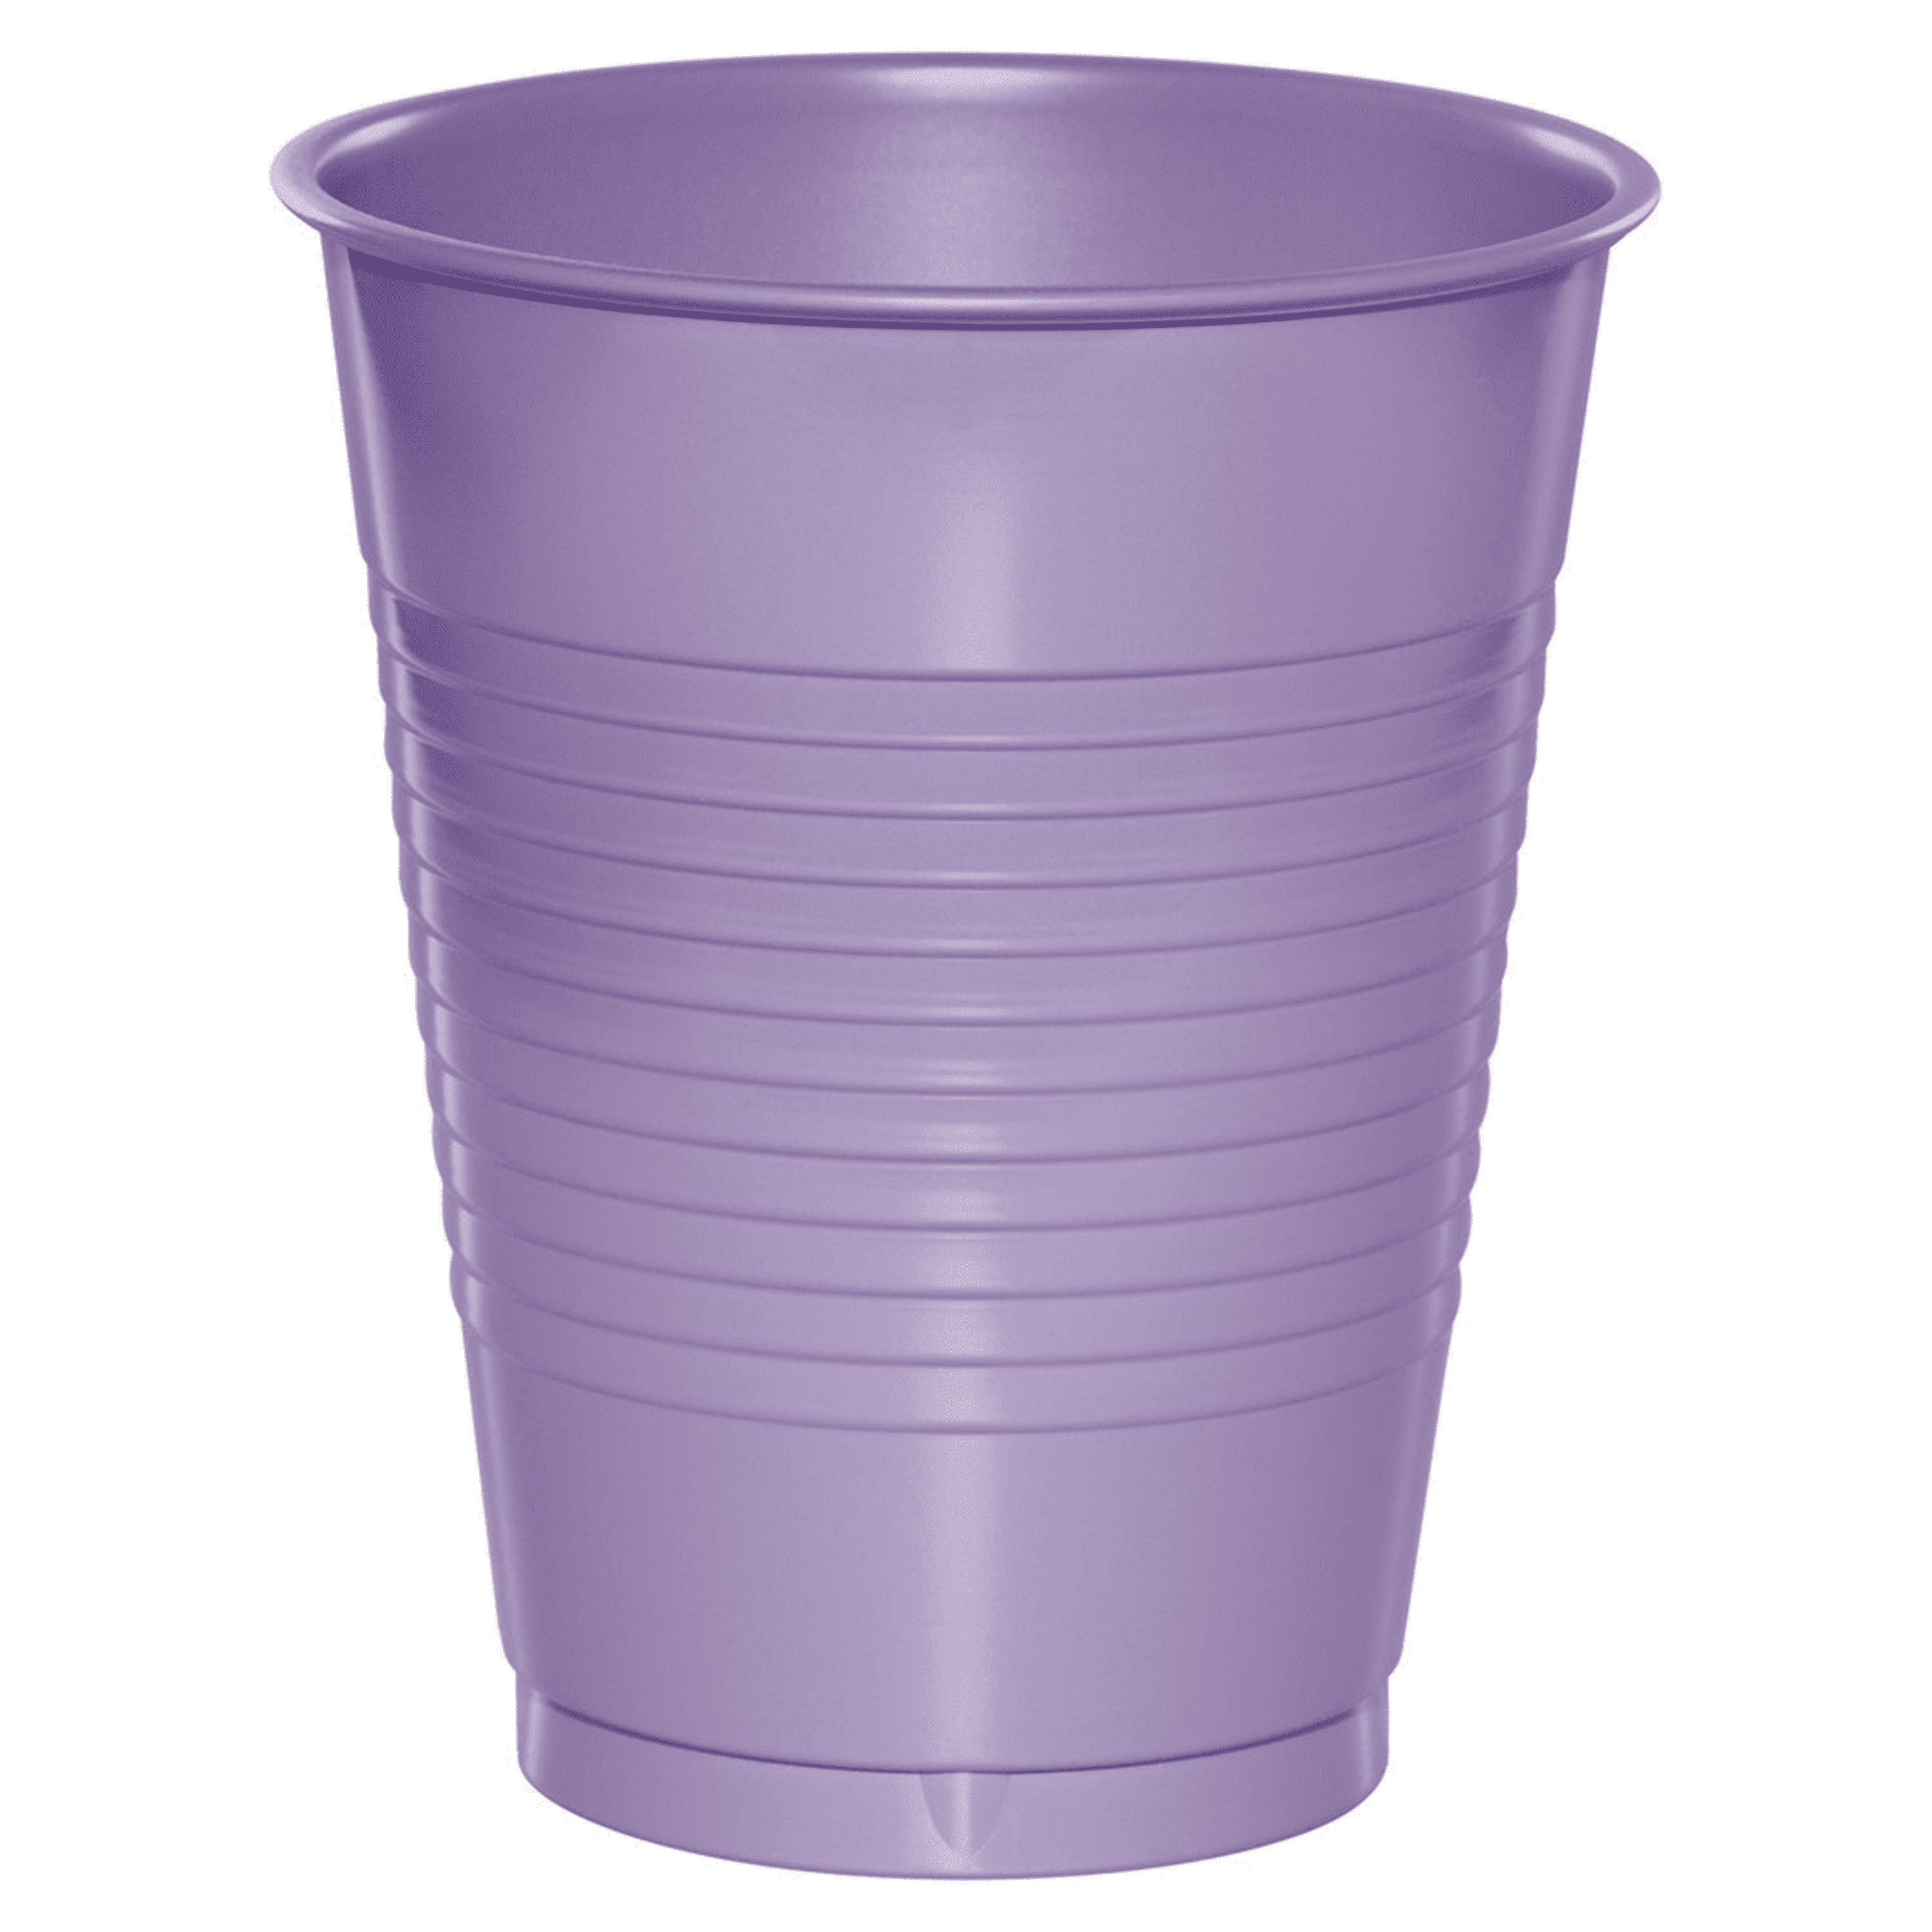 cssopenss 120 pcs 16 oz purple plastic cups 16 oz purple Duty Drinking cups  purple plastic Disposabl…See more cssopenss 120 pcs 16 oz purple plastic